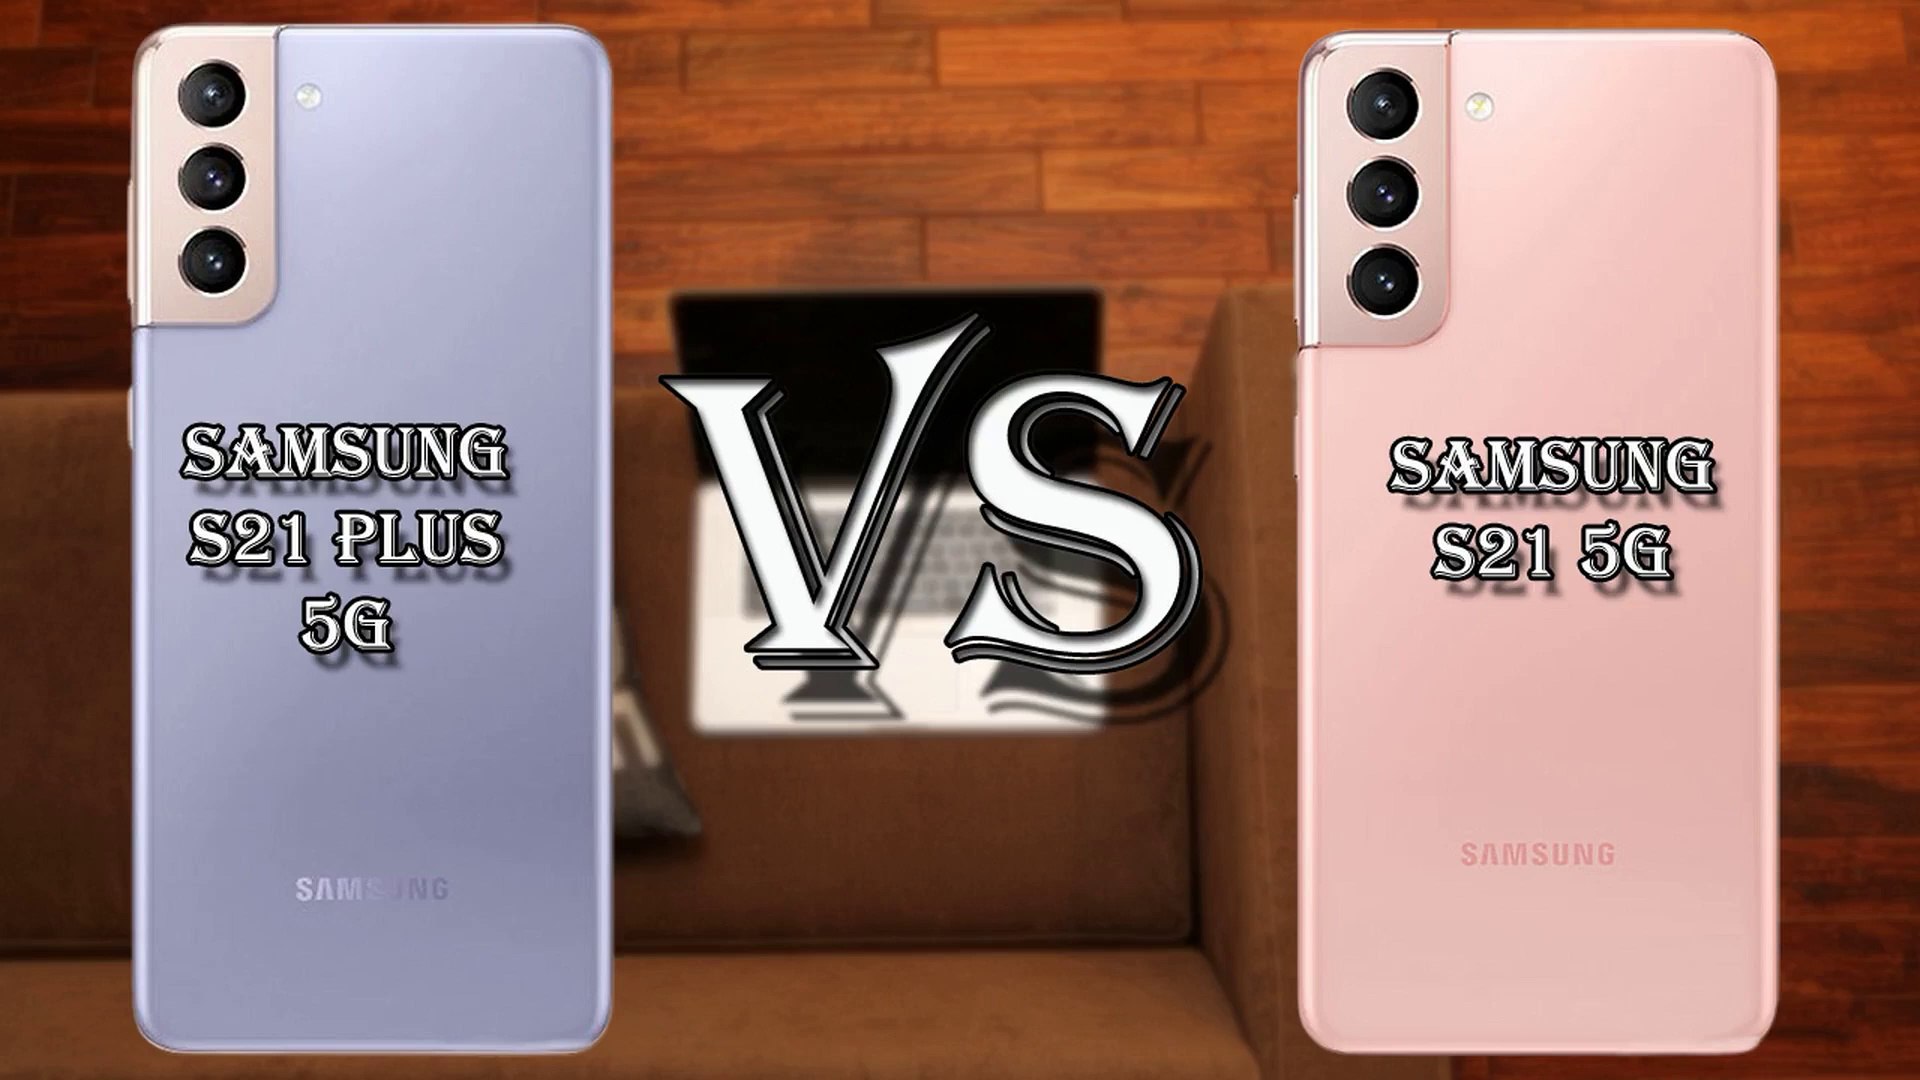 Samsung Vs Samsung Samsung Galaxy S21 Plus Vs Samsung S21 5g Spcification Comparison Video Dailymotion